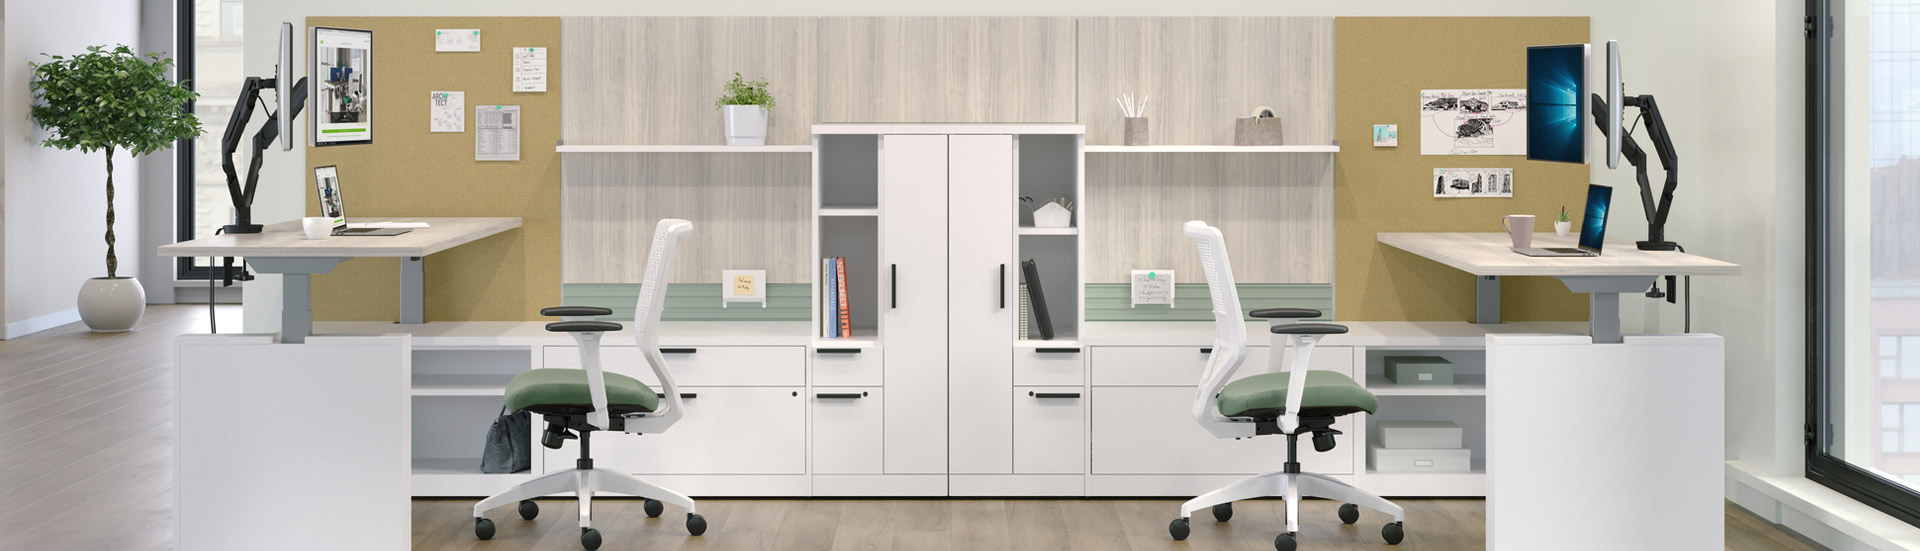 office furniture & office design center